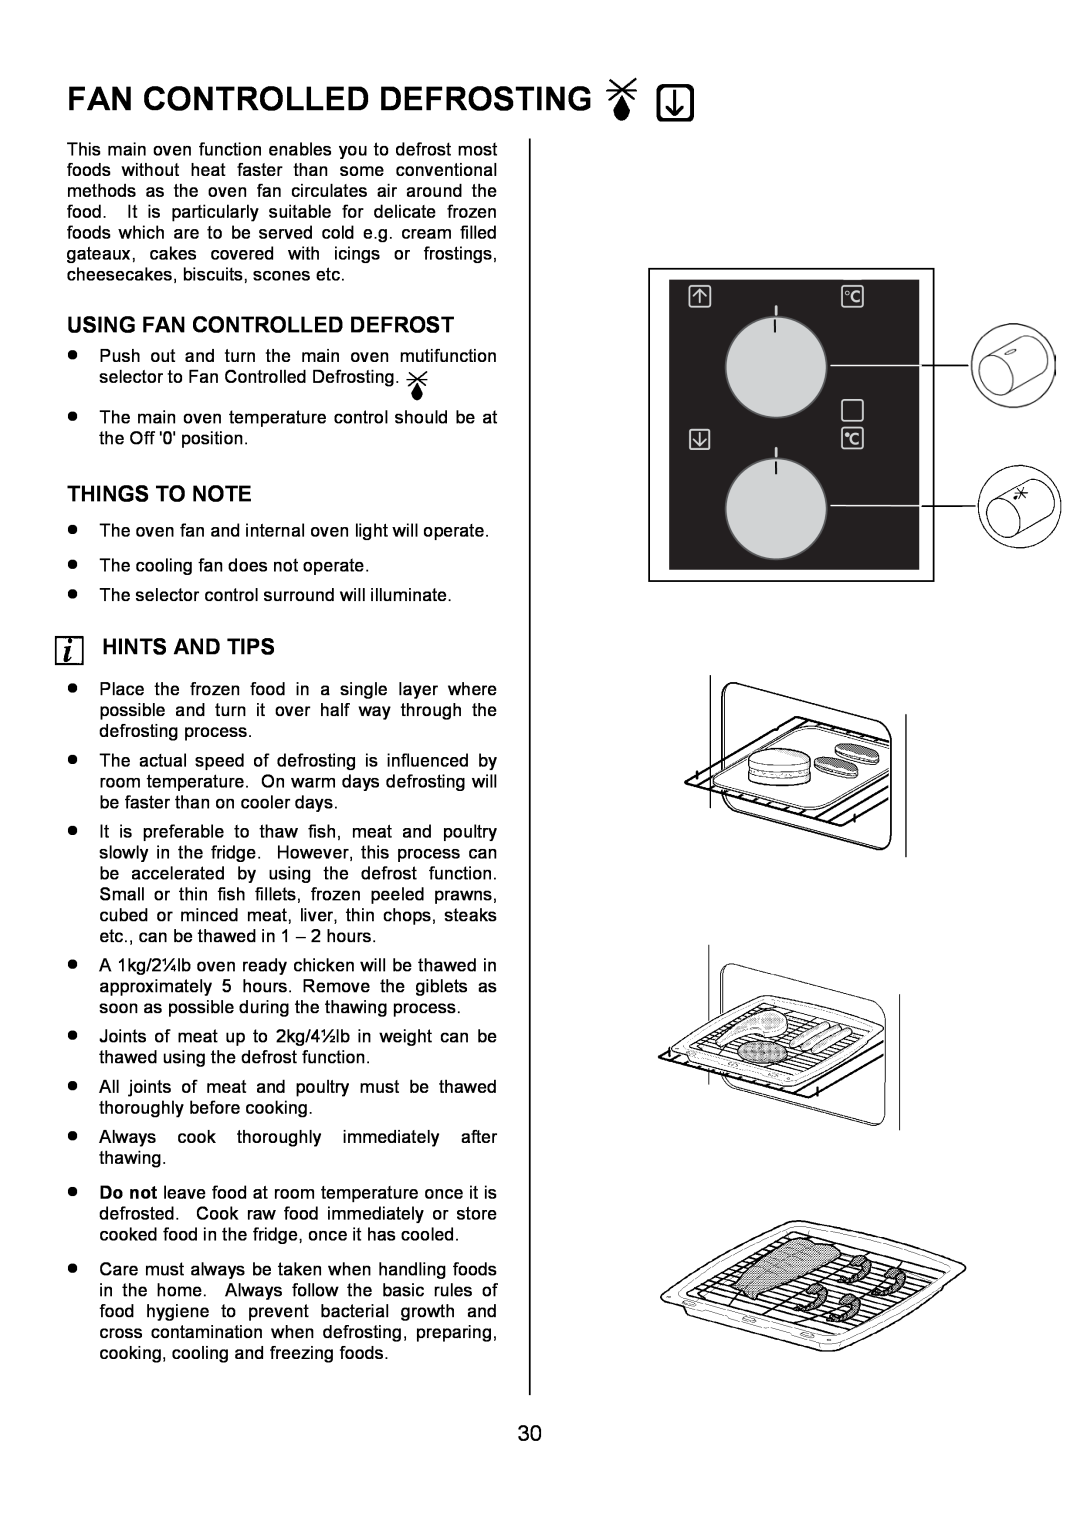 Electrolux U7101-4 Fan Controlled Defrosting, Using Fan Controlled Defrost, Things To Note, Hints And Tips 